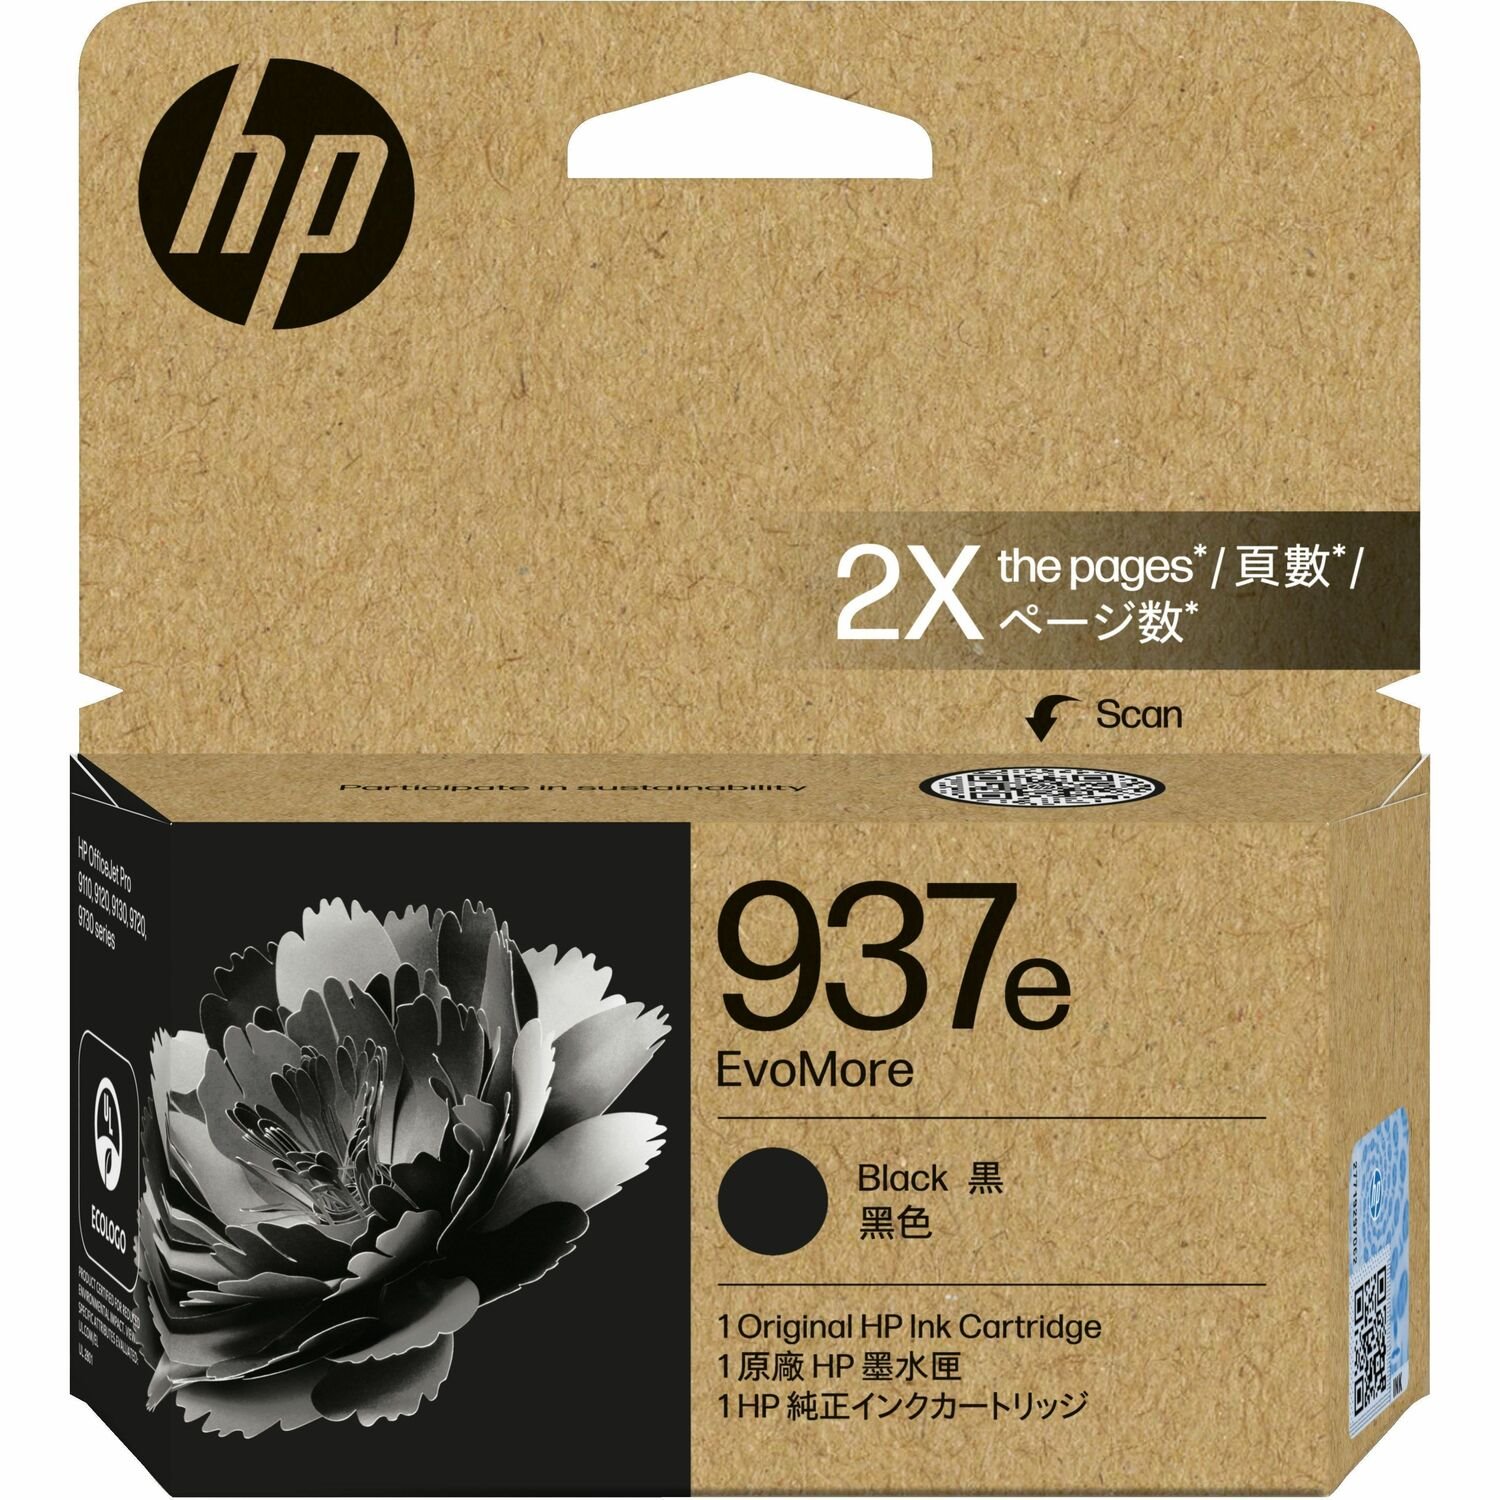 HP EvoMore 937e Original Standard Yield Inkjet Ink Cartridge - Single Pack - Black - 1 / Pack